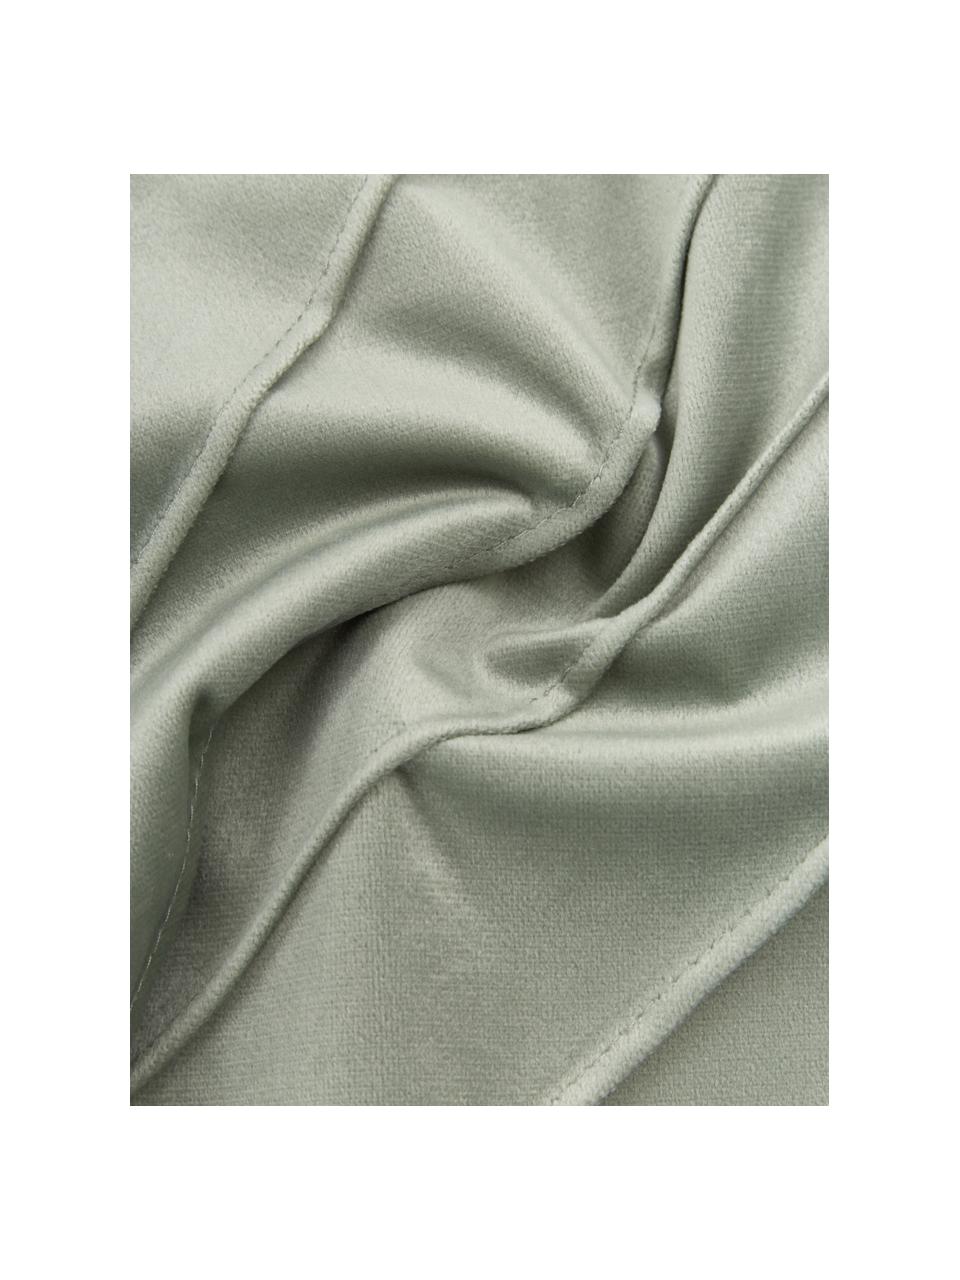 Fluwelen kussenhoes Leyla in saliegroen met structuurpatroon, Fluweel (100% polyester), Groen, B 40 x L 40 cm